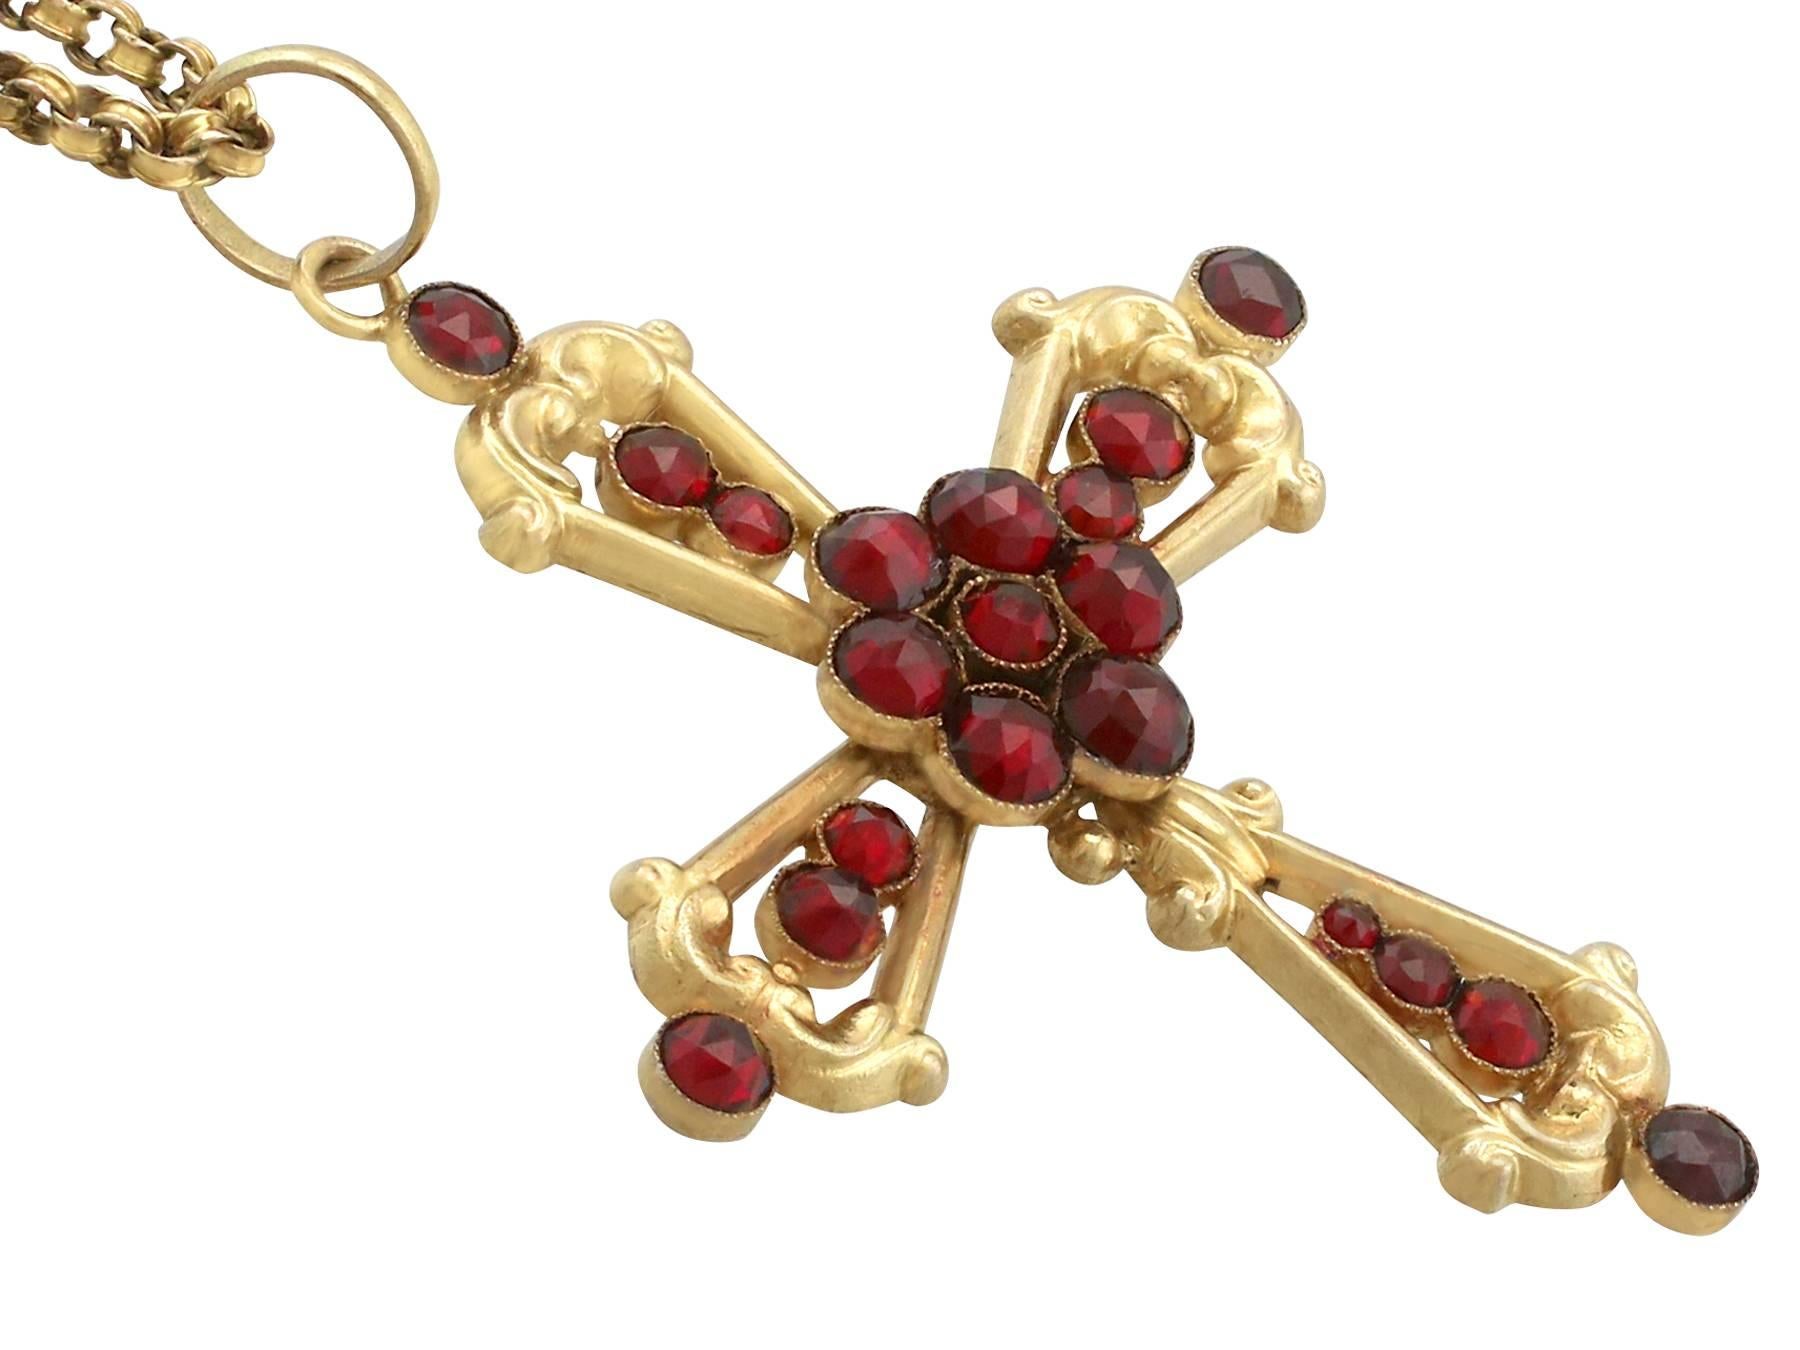 victorian cross necklace